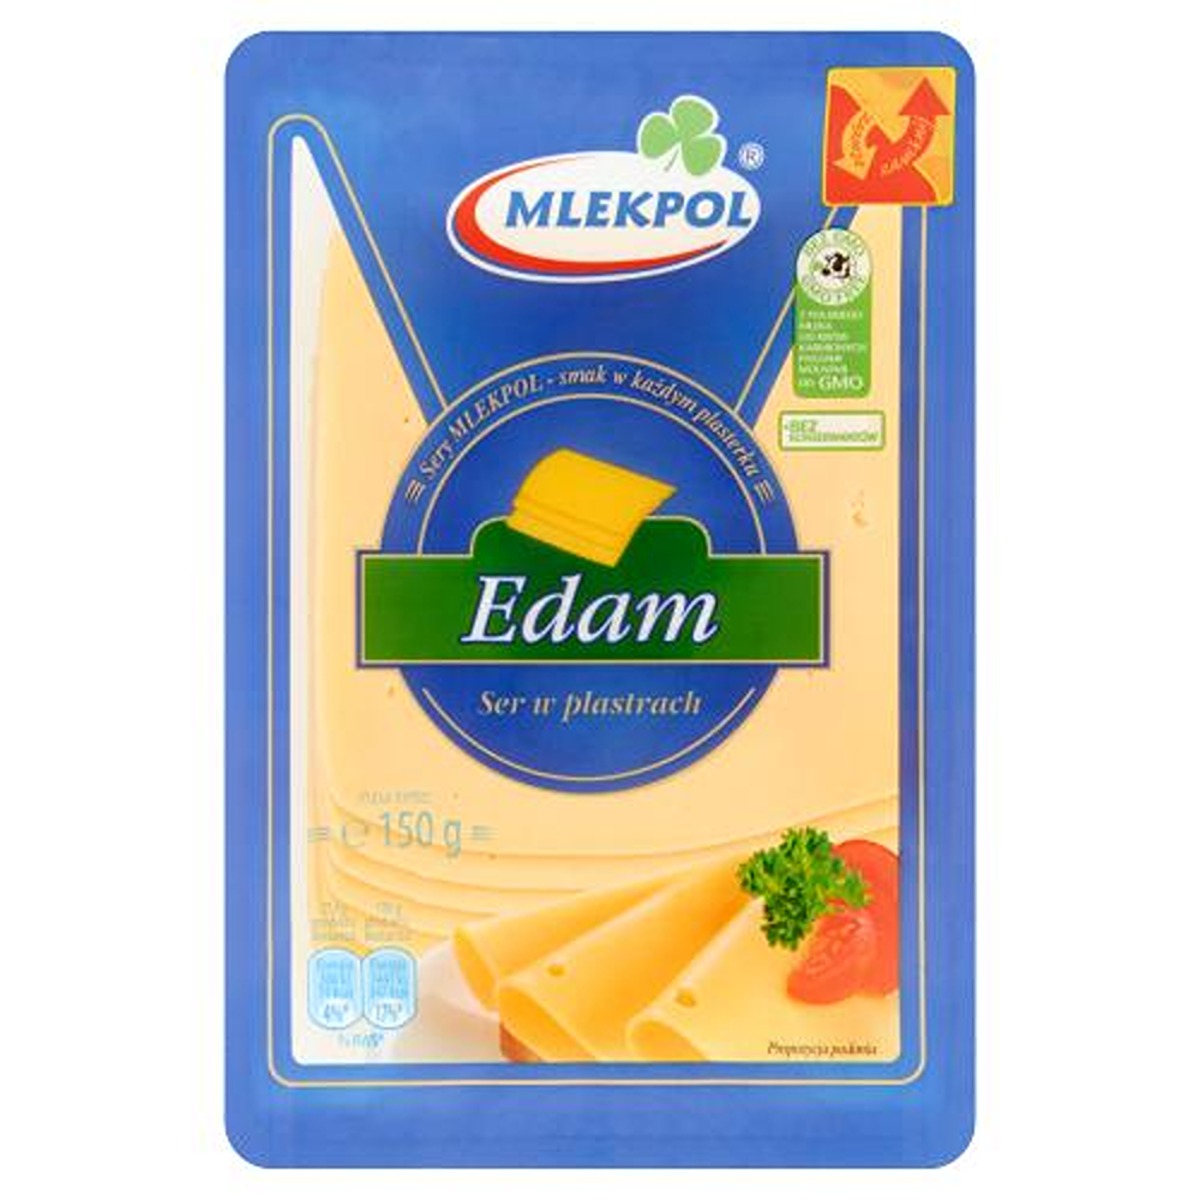 Mlekpol Edam Cheese - 150g - 500g